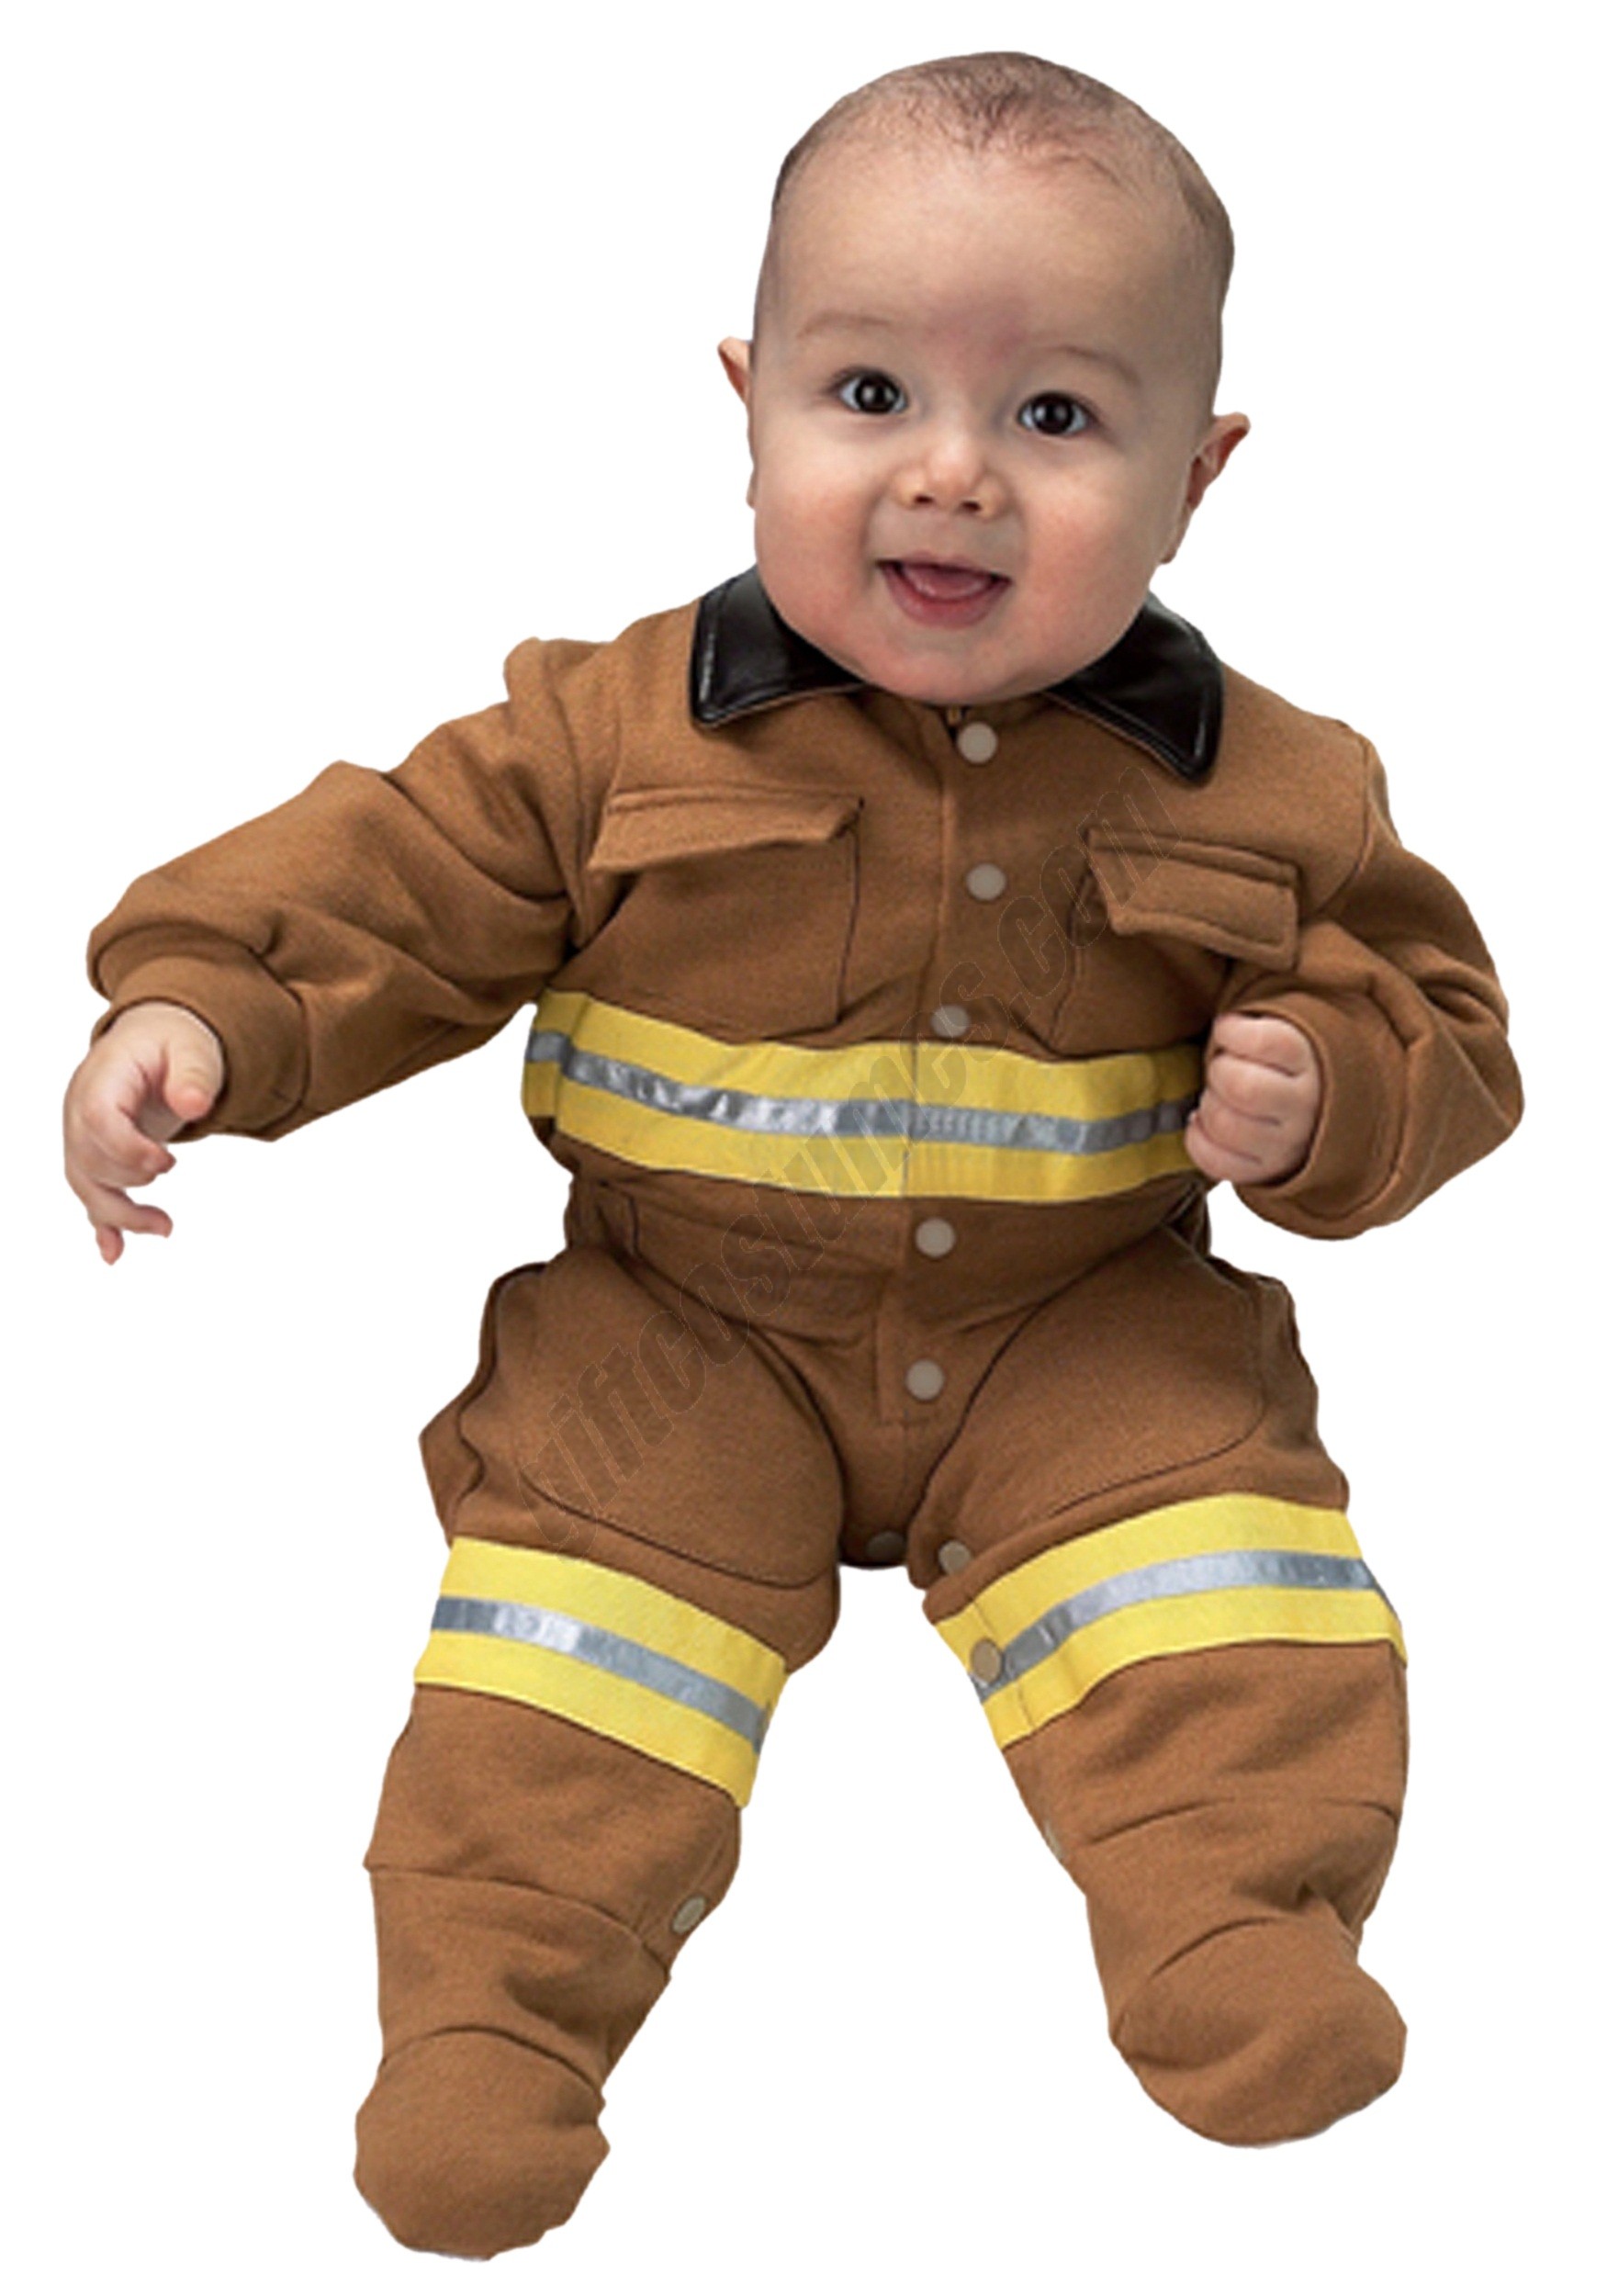 Infant Firefighter Costume Promotions - Infant Firefighter Costume Promotions